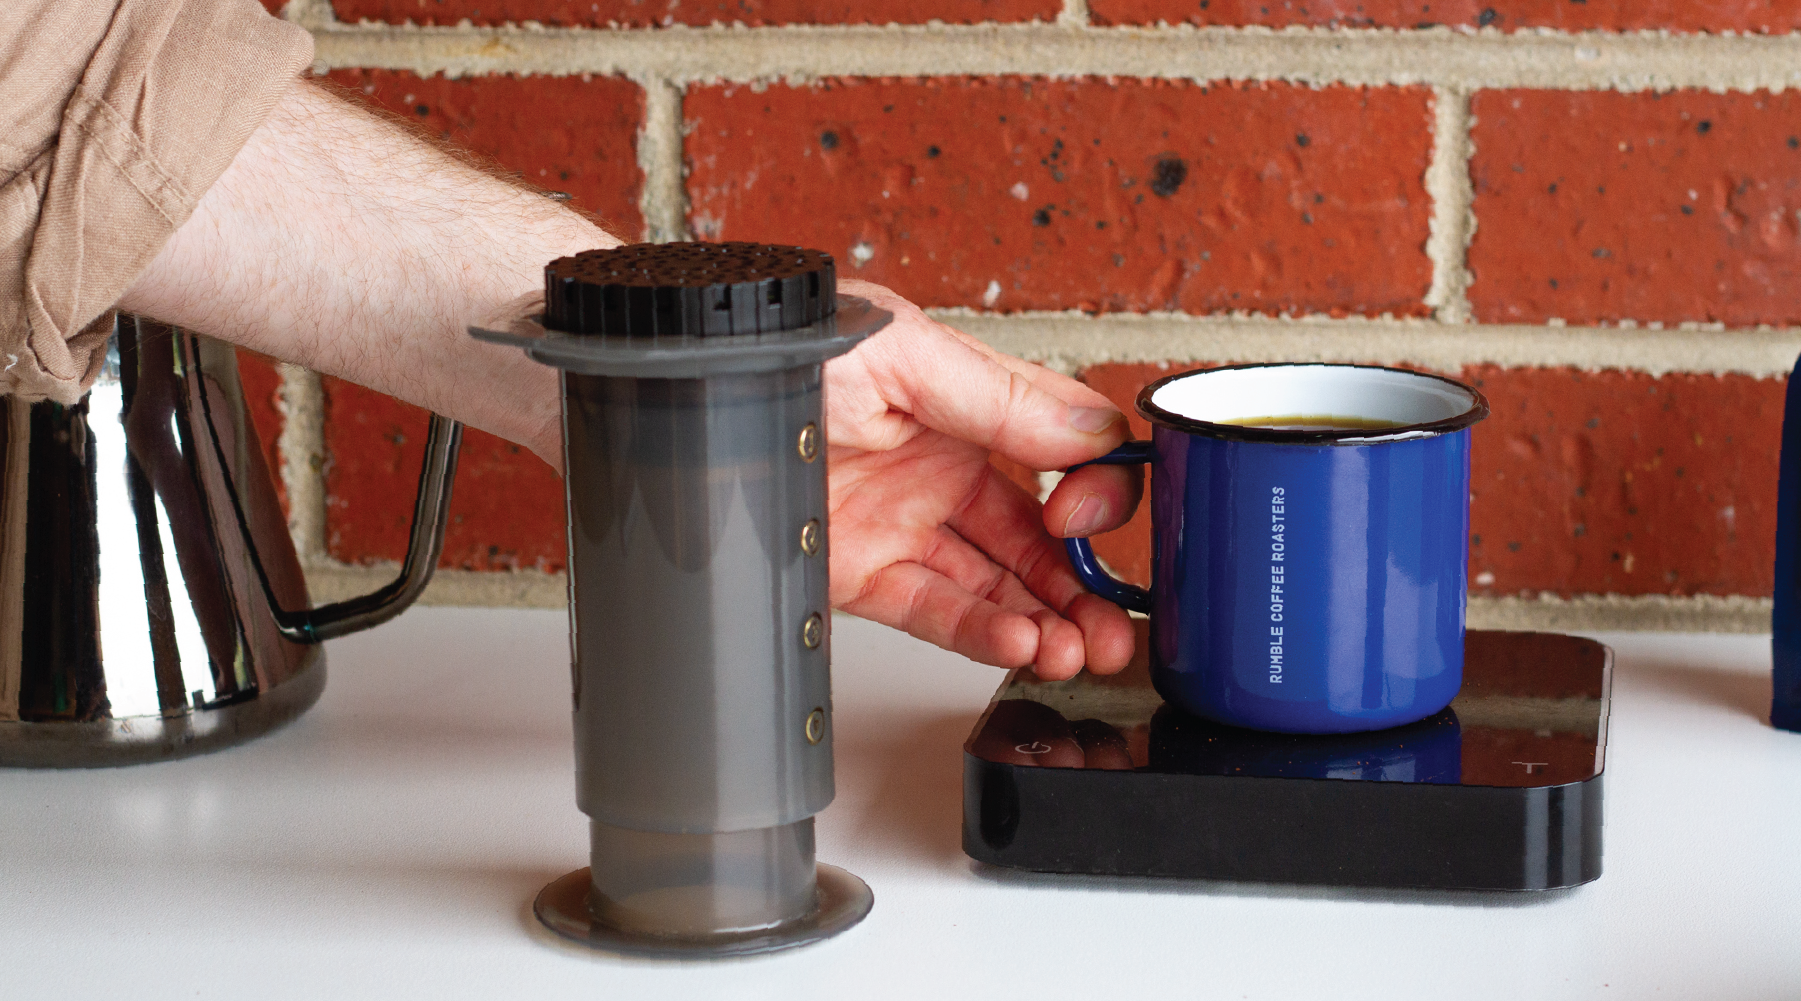 Filter Coffee made using an Aeropress